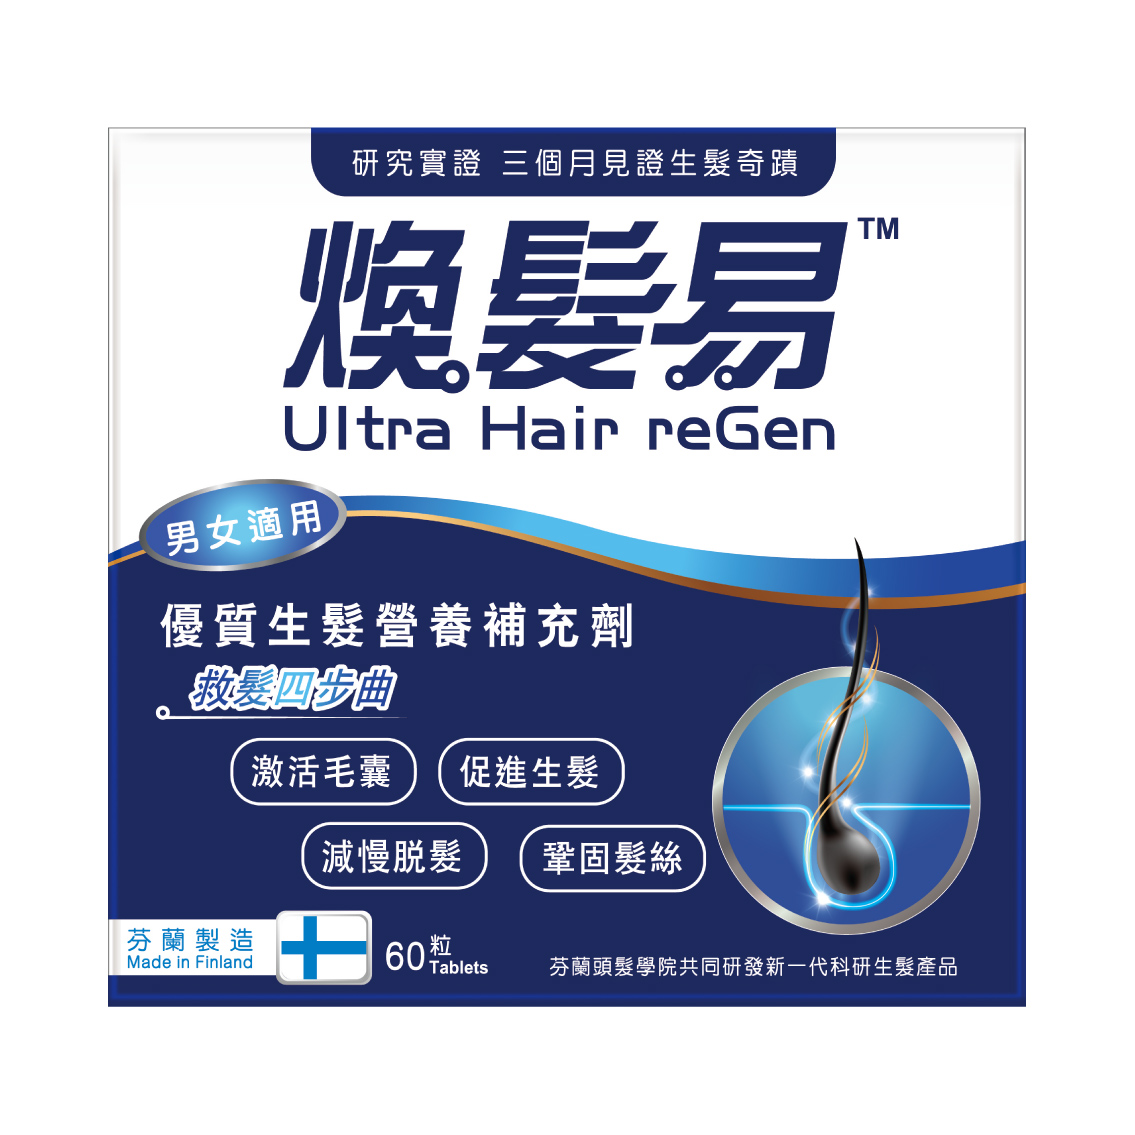 Ultra Hair reGen